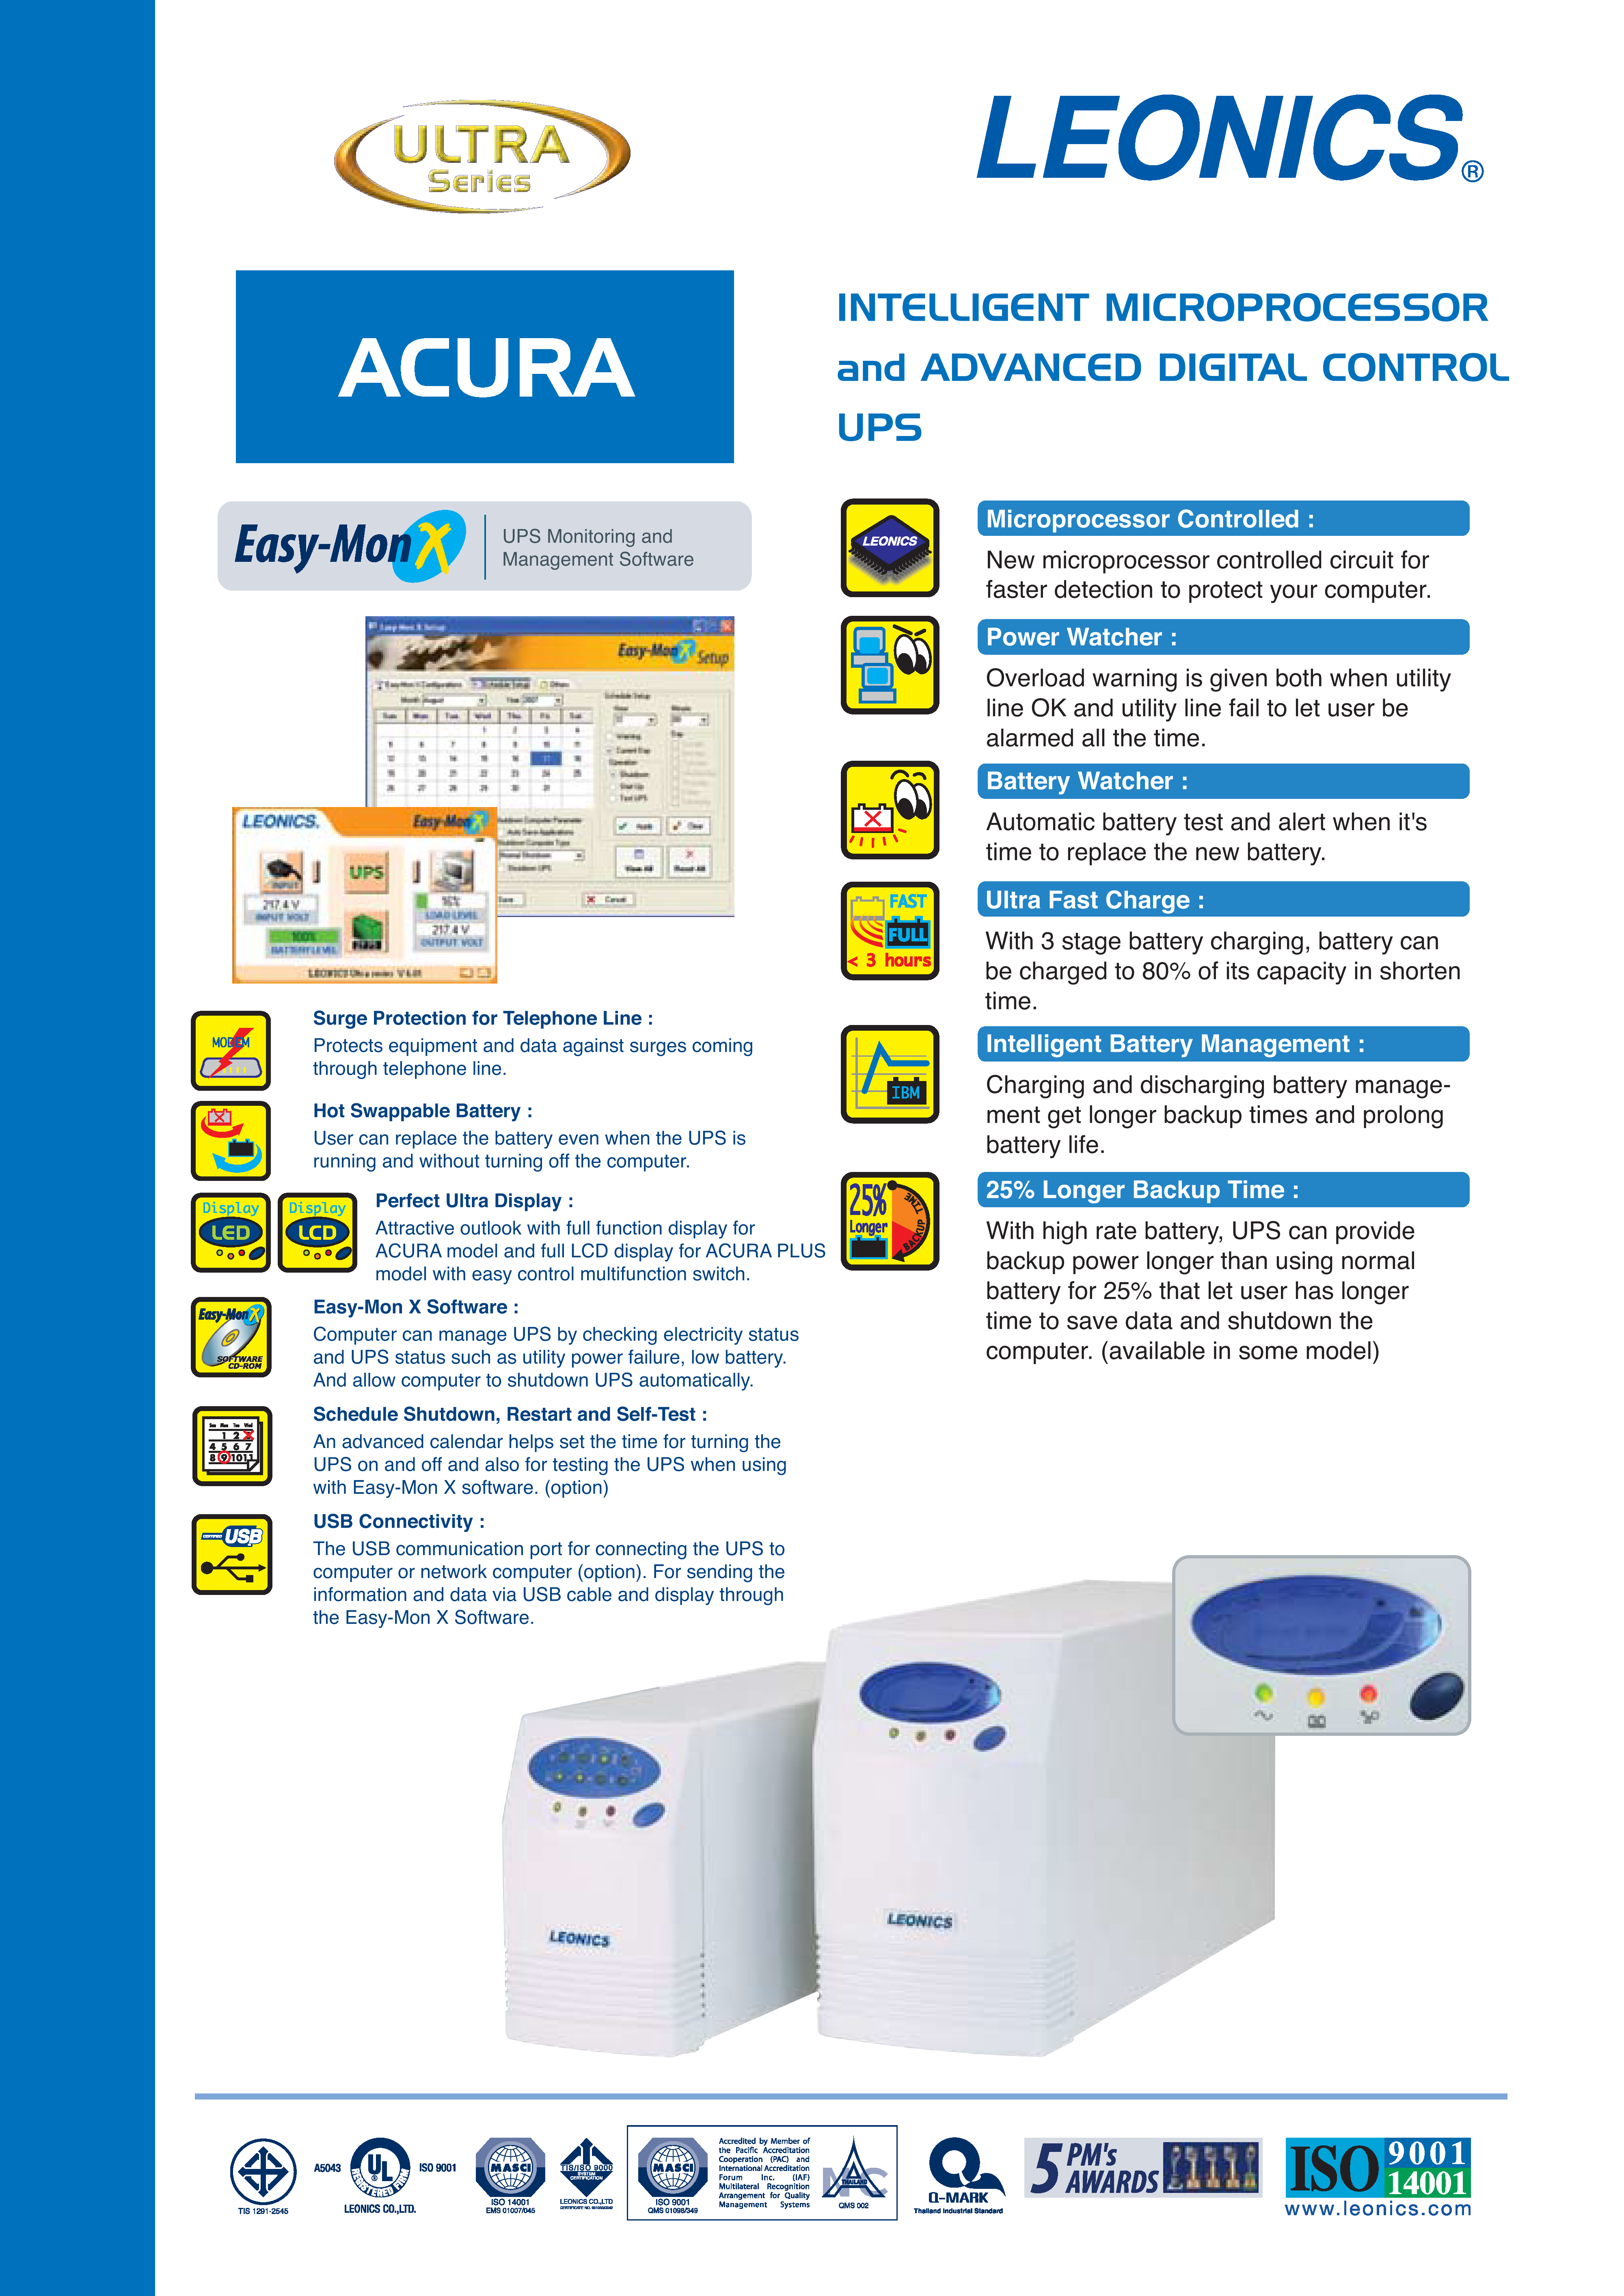 Acura_Brochure_1.png